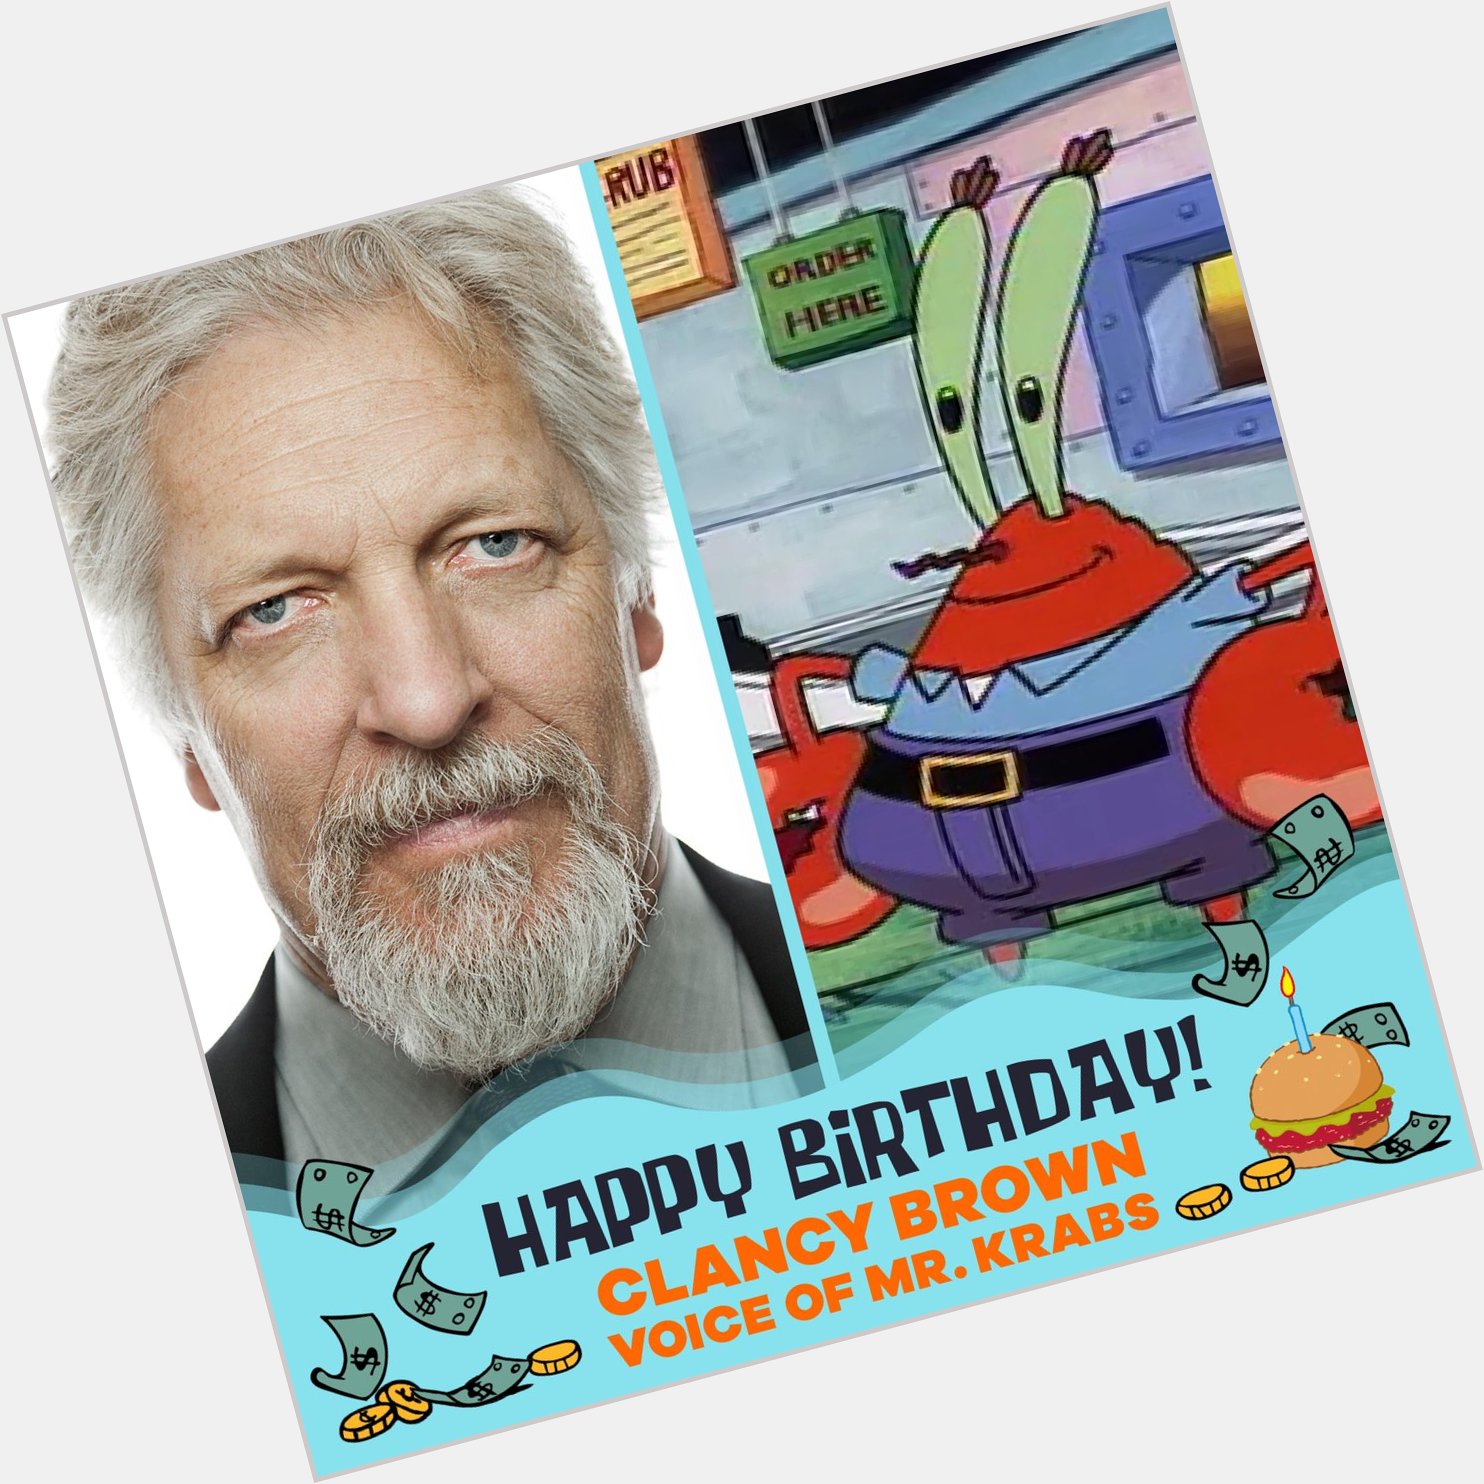 Happy Birthday Clancy Brown, the voice of Mr. Krabs! 